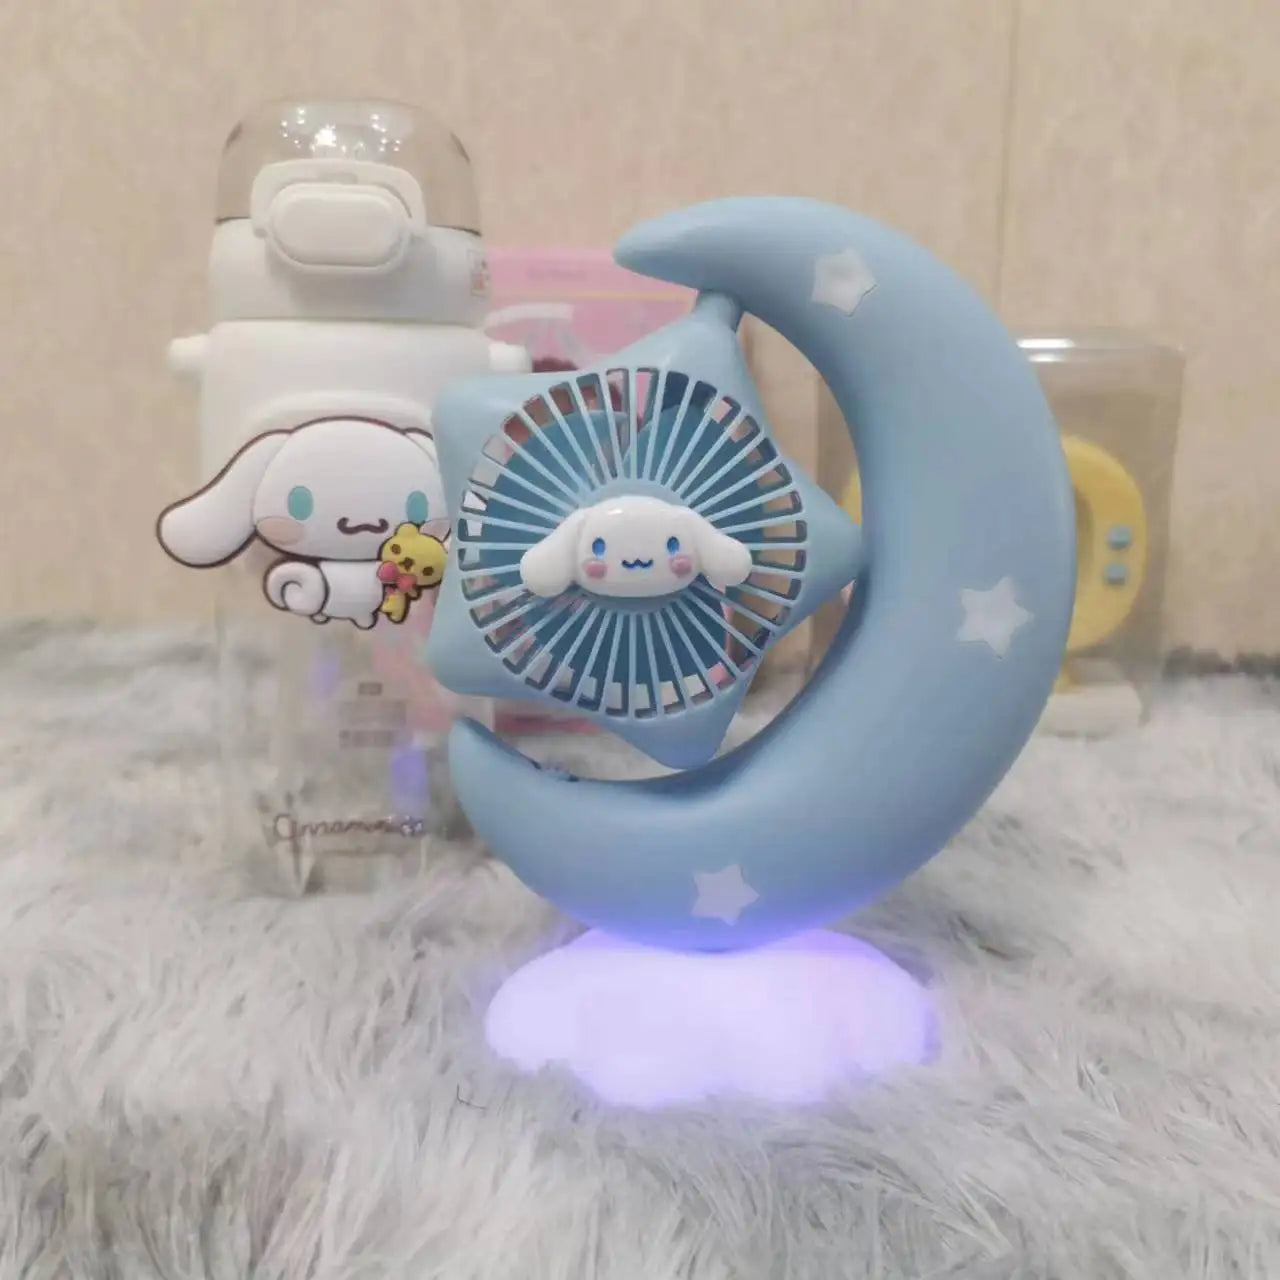 Sanrio USB Fan Lamp, My Melody, Cinamolol, 4 Light Switches